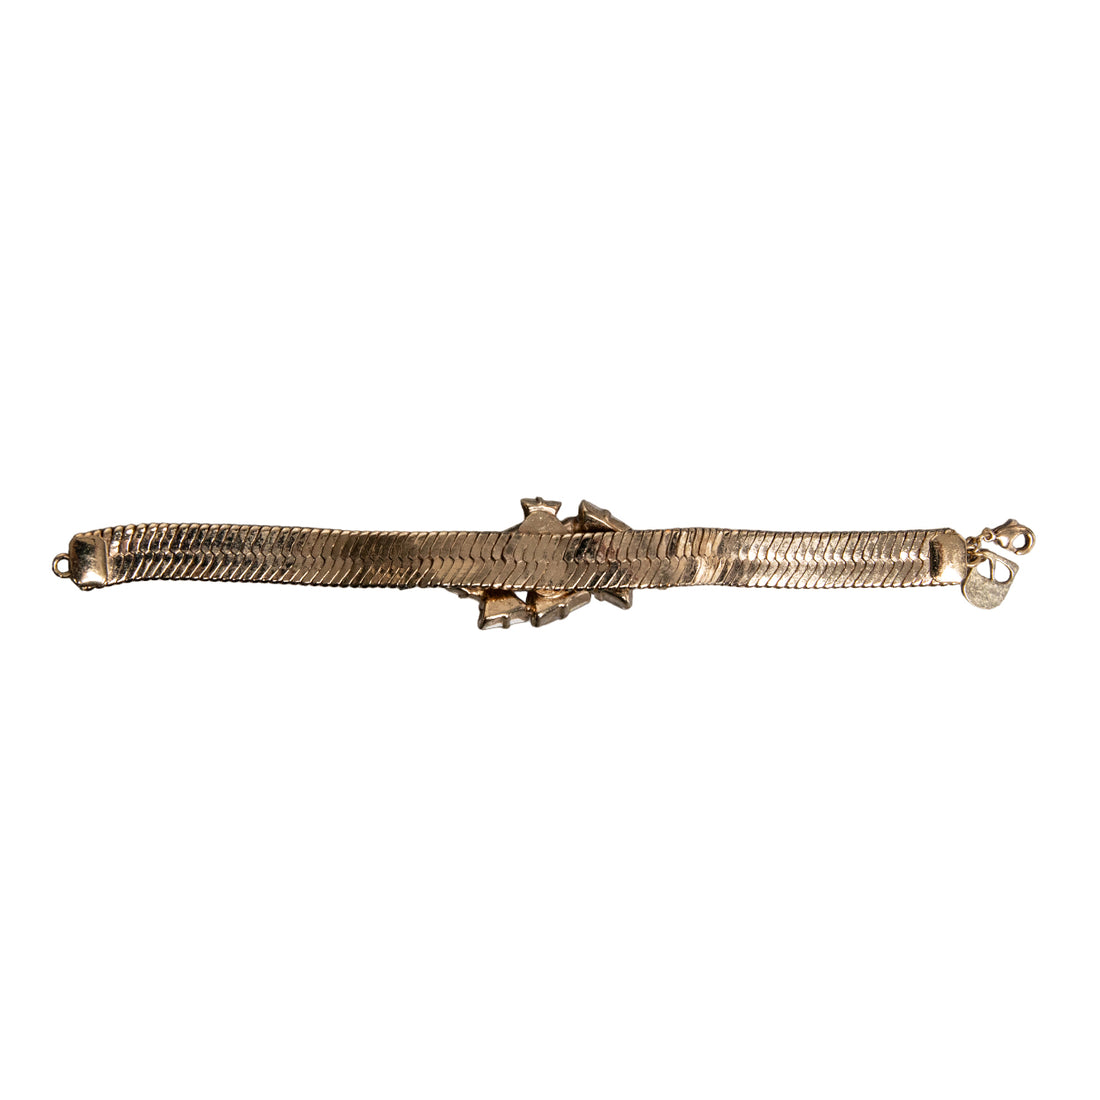 N.N. Filigranes Armband mit ausgefallenem Zirkonia-Besatz